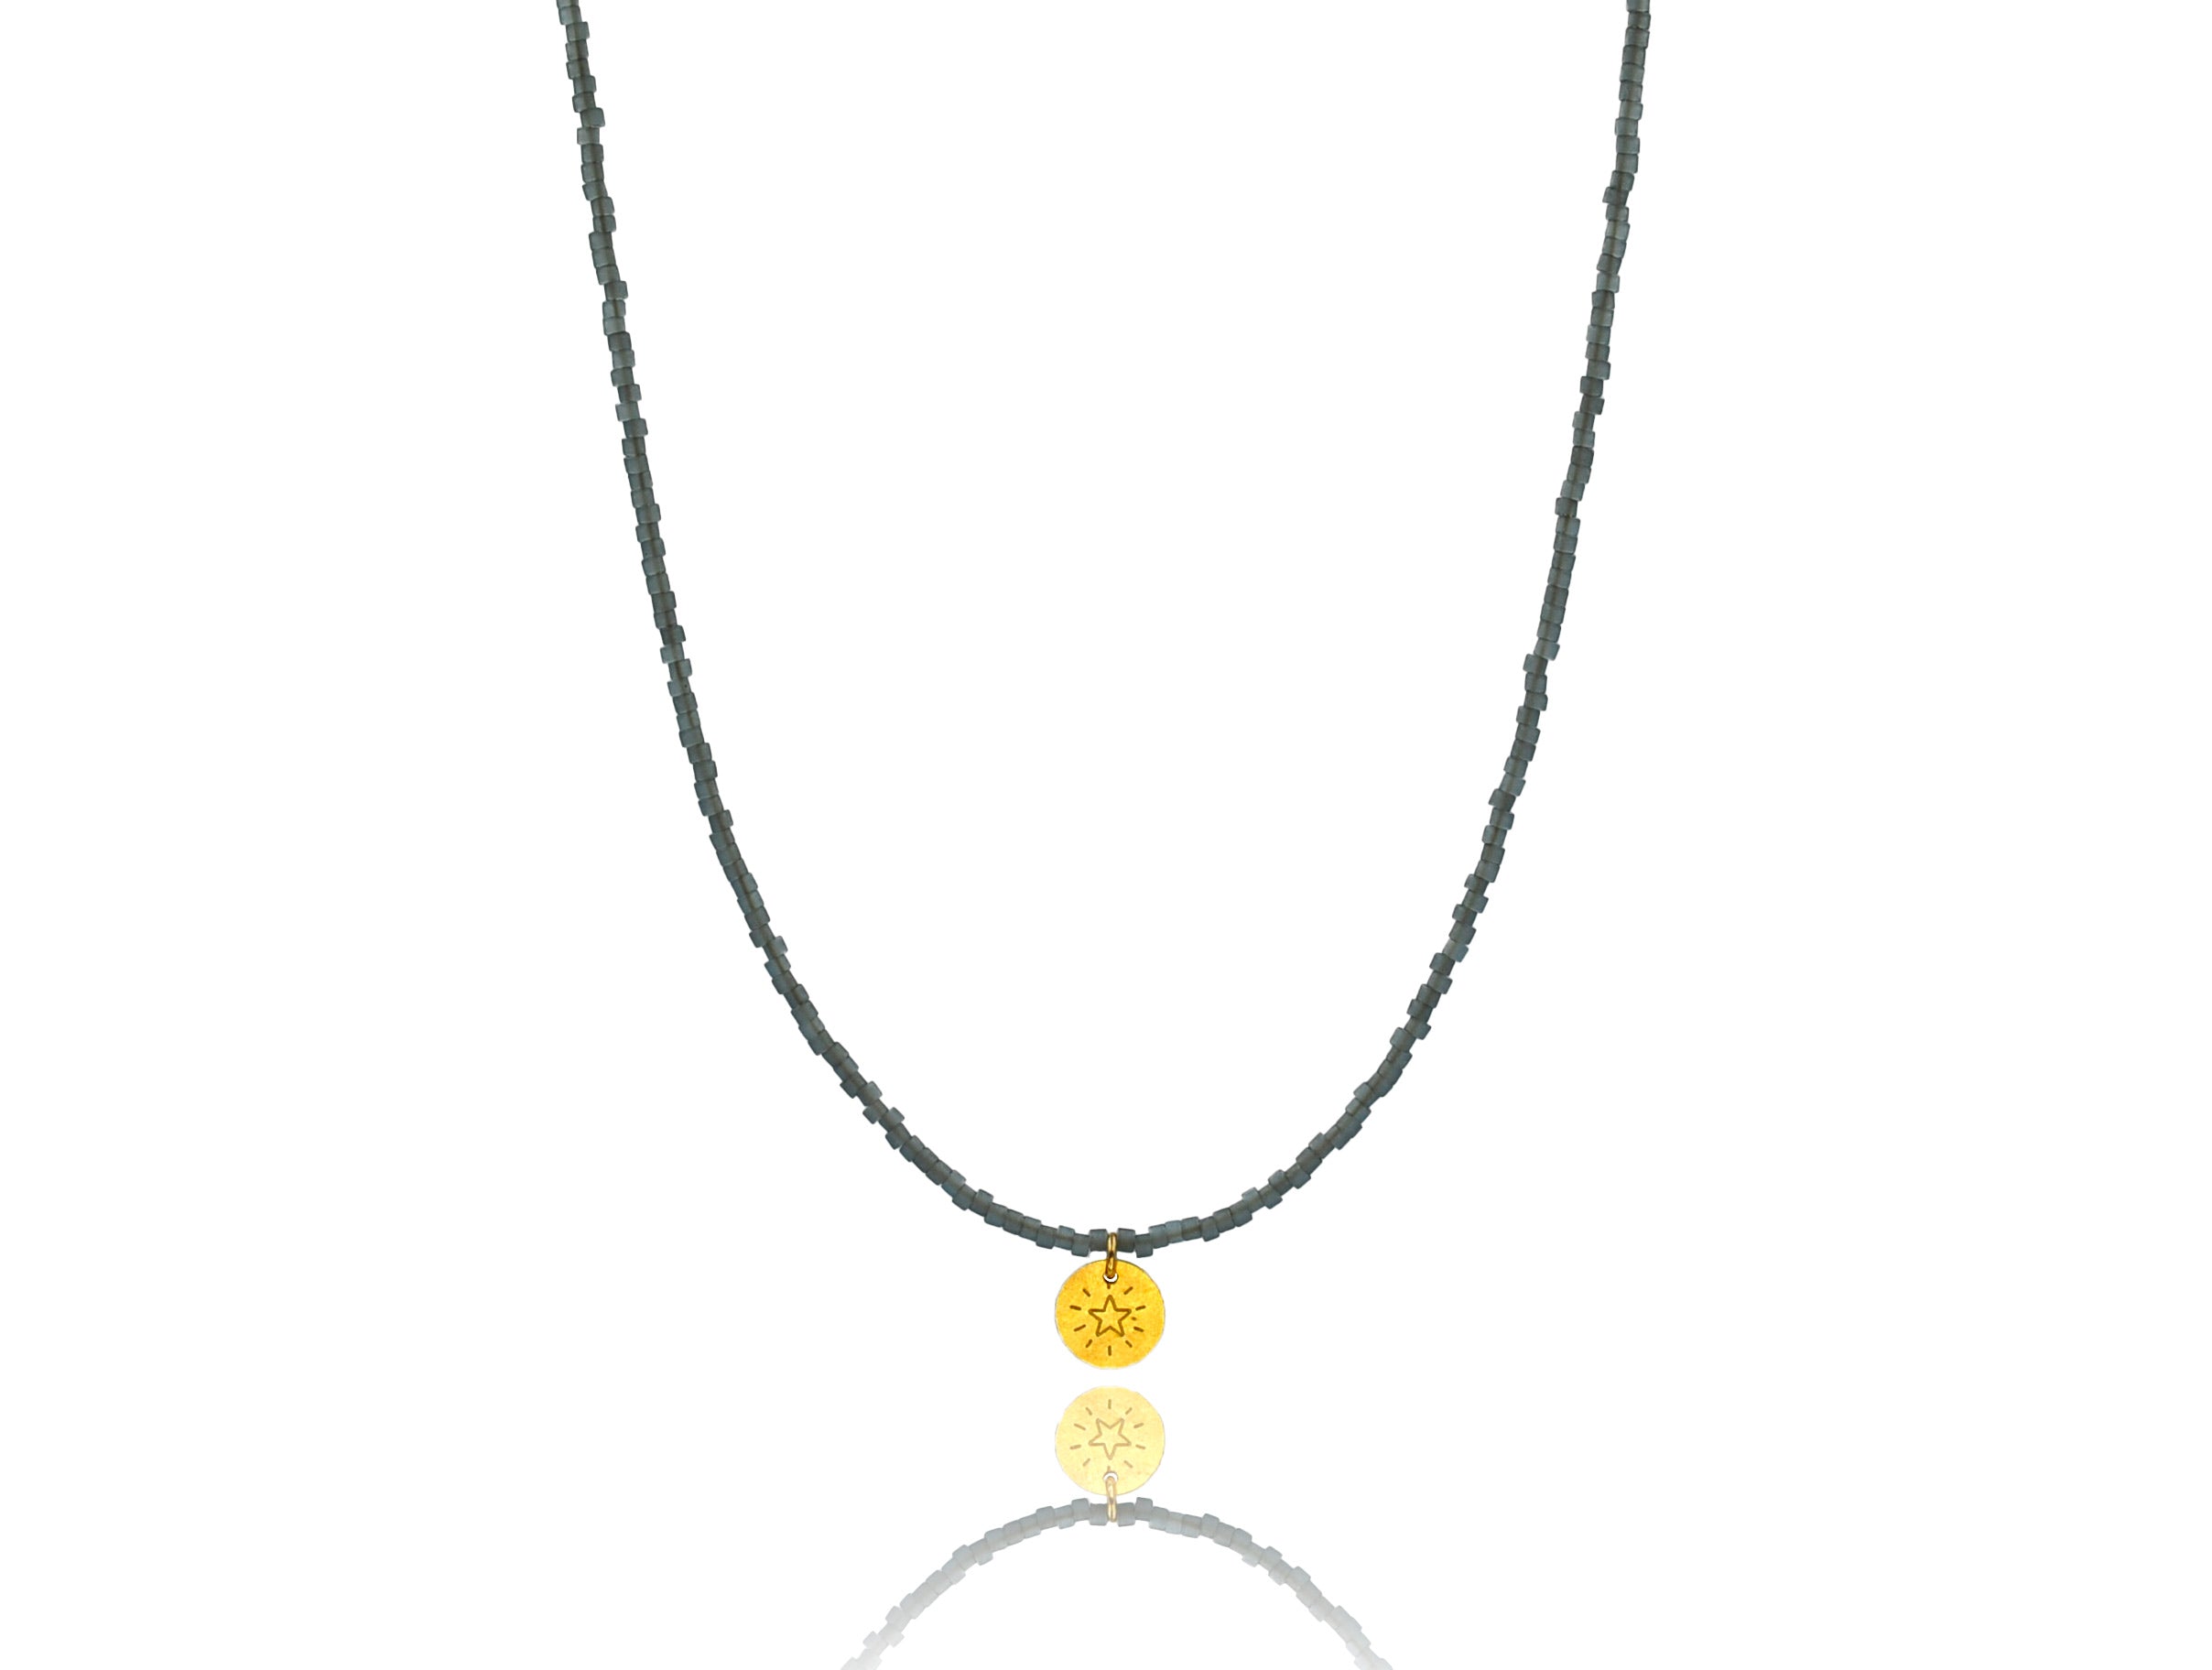 Transparent Grey ‘Little Star’ Charm Necklace